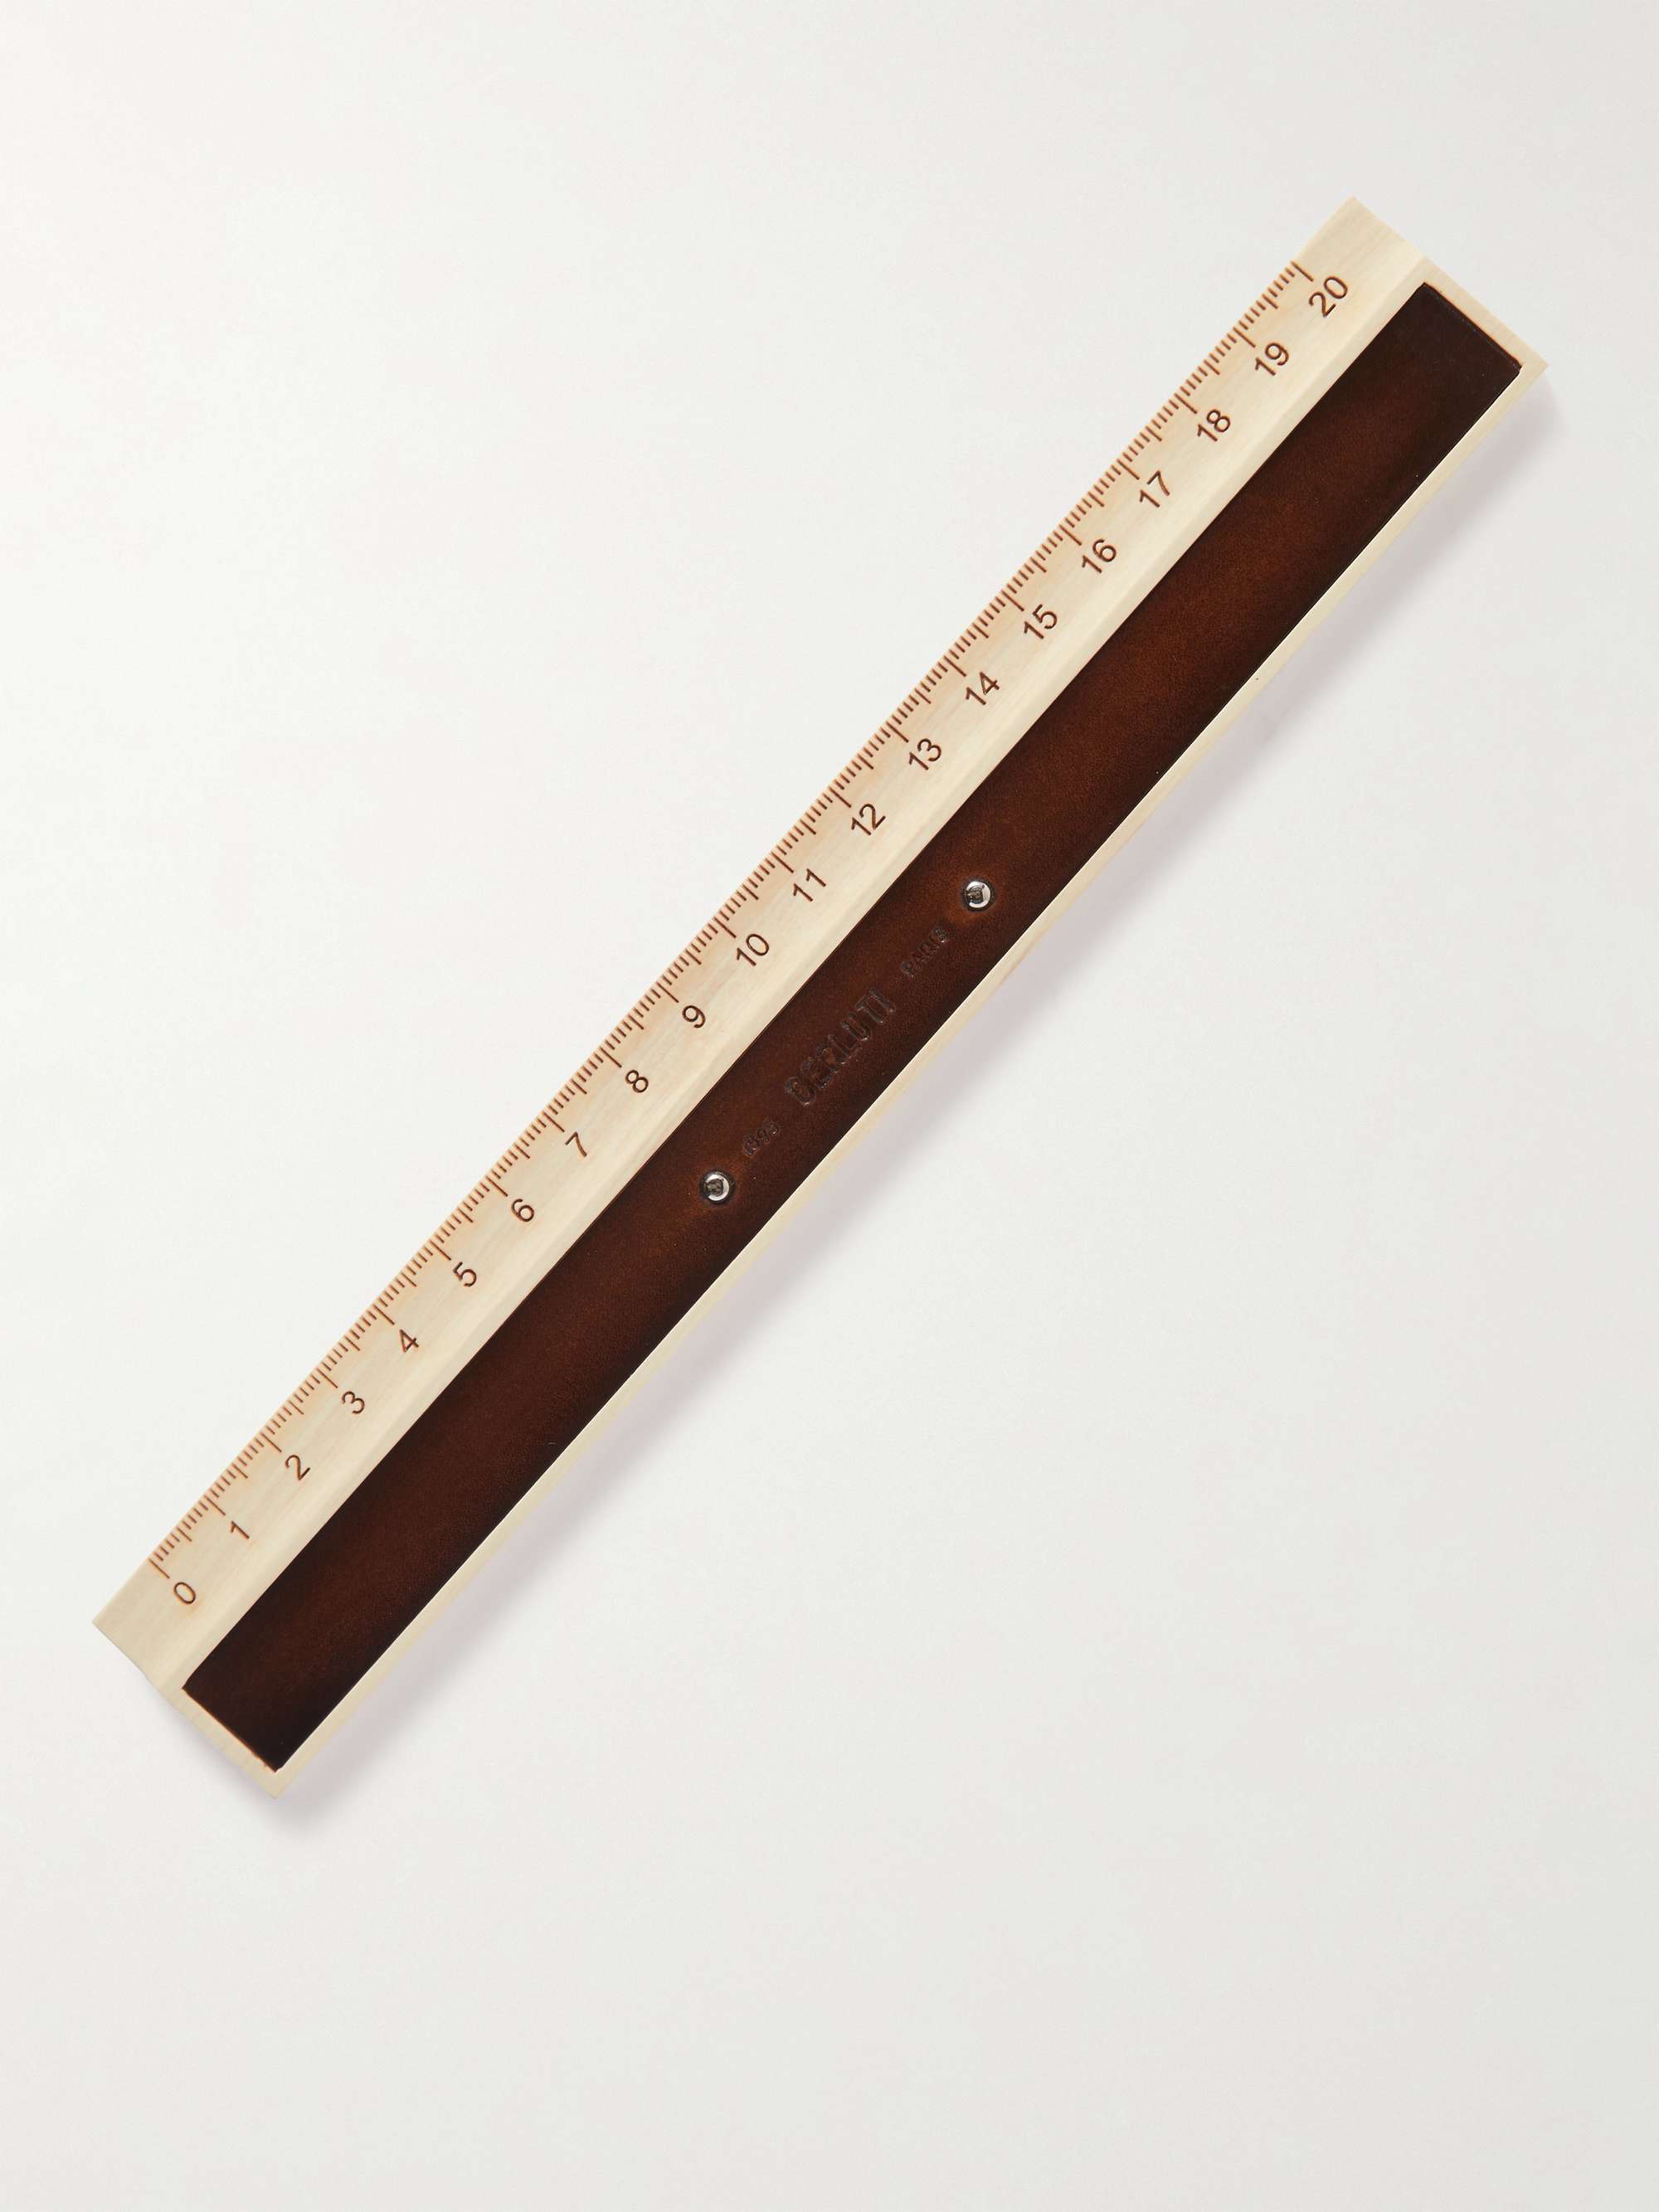 BERLUTI Venezia Leather-Trimmed Wood Ruler